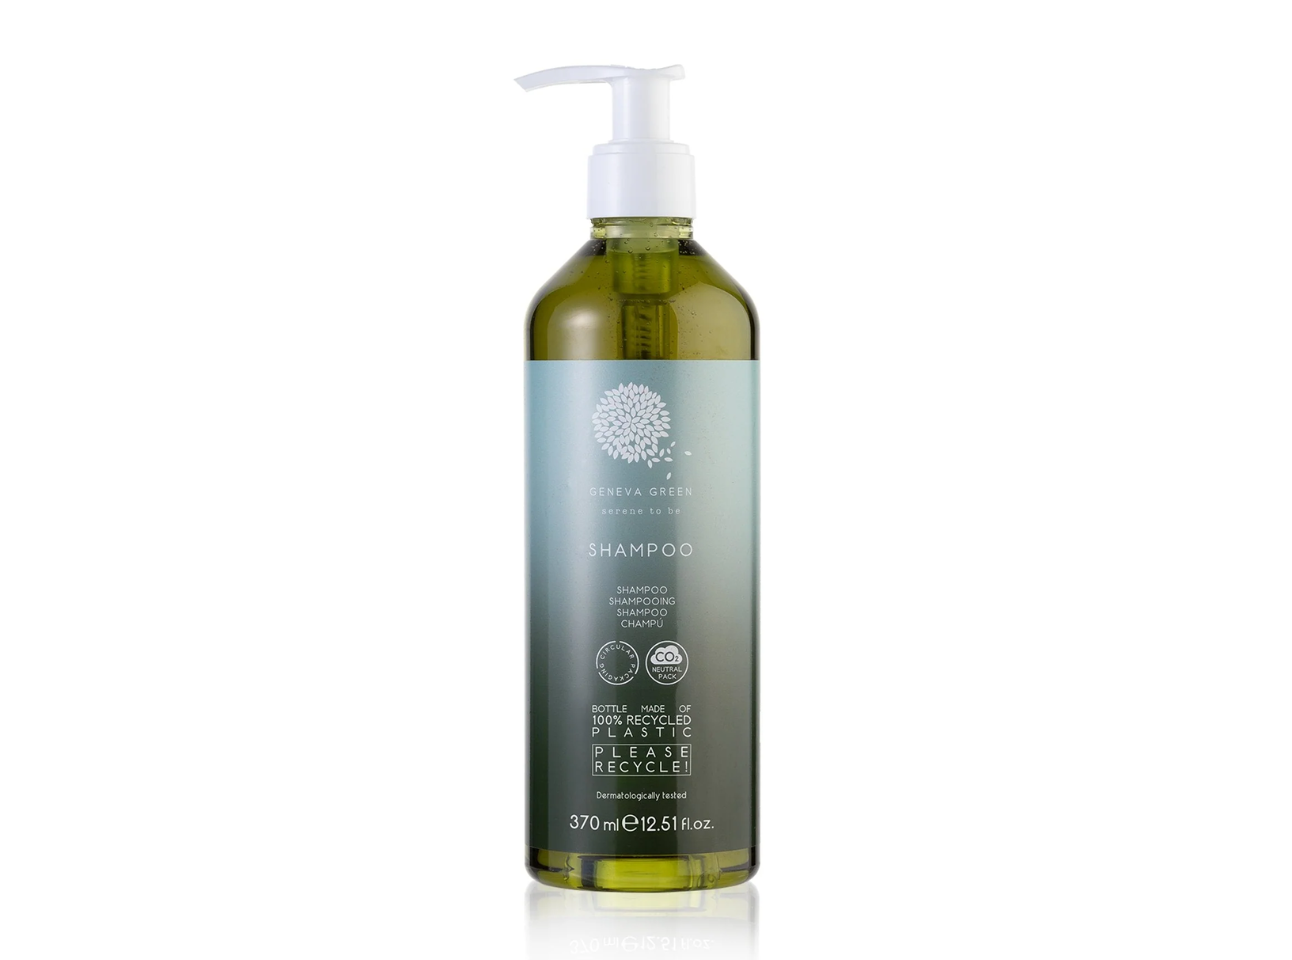 Geneva Green Shampoo (nachfüllbar) - Spenderflasche 370 ml aus recyceltem PET